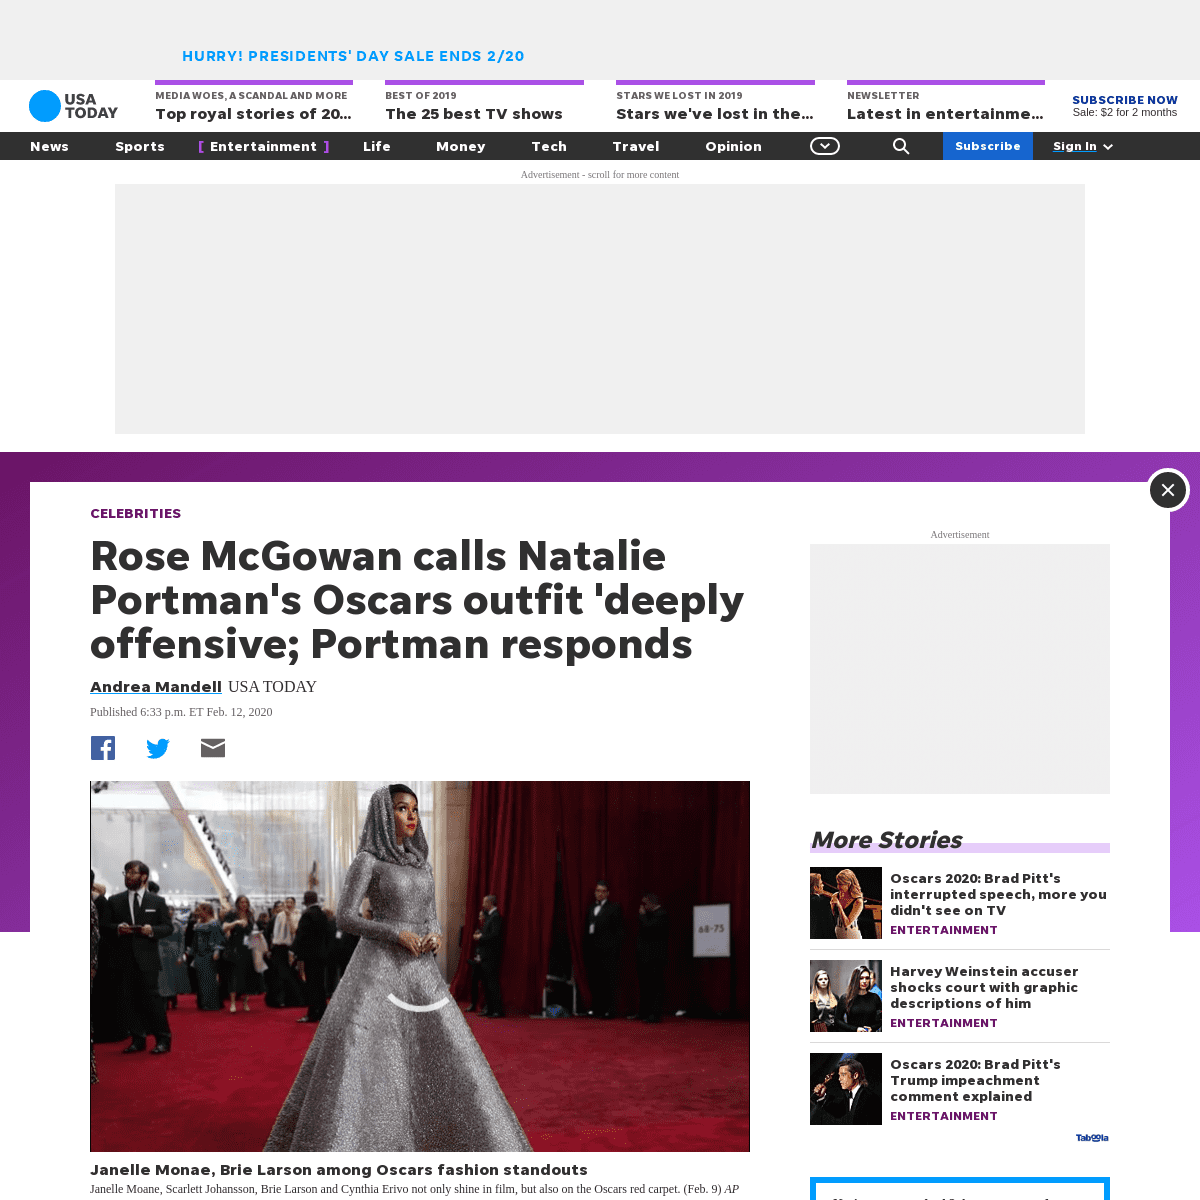 A complete backup of www.usatoday.com/story/entertainment/celebrities/2020/02/12/natalie-portman-responds-rose-mcgowan-diss-osca